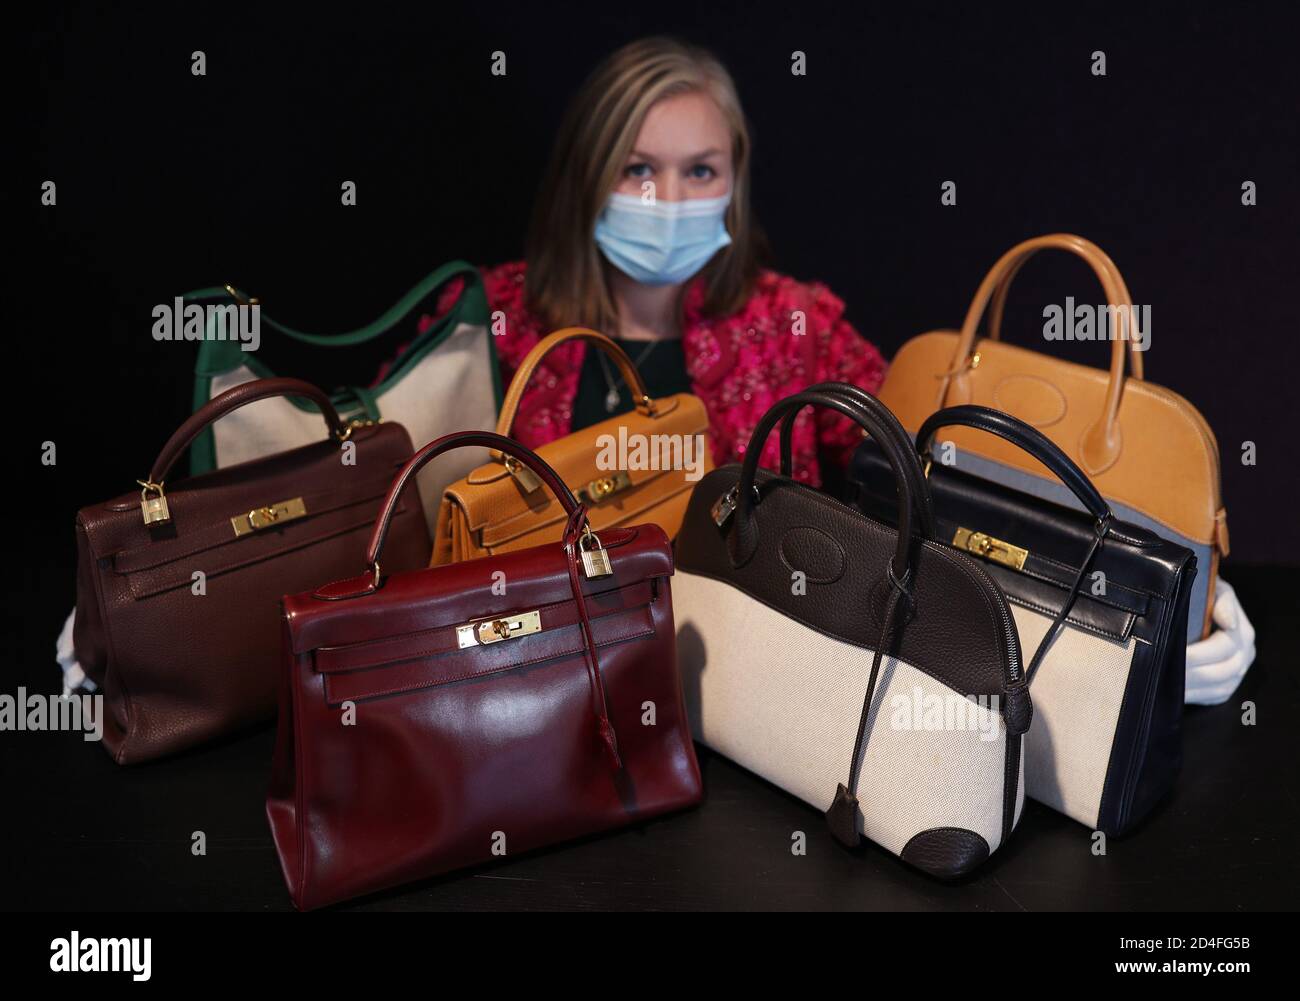 Handbags Collection for Women